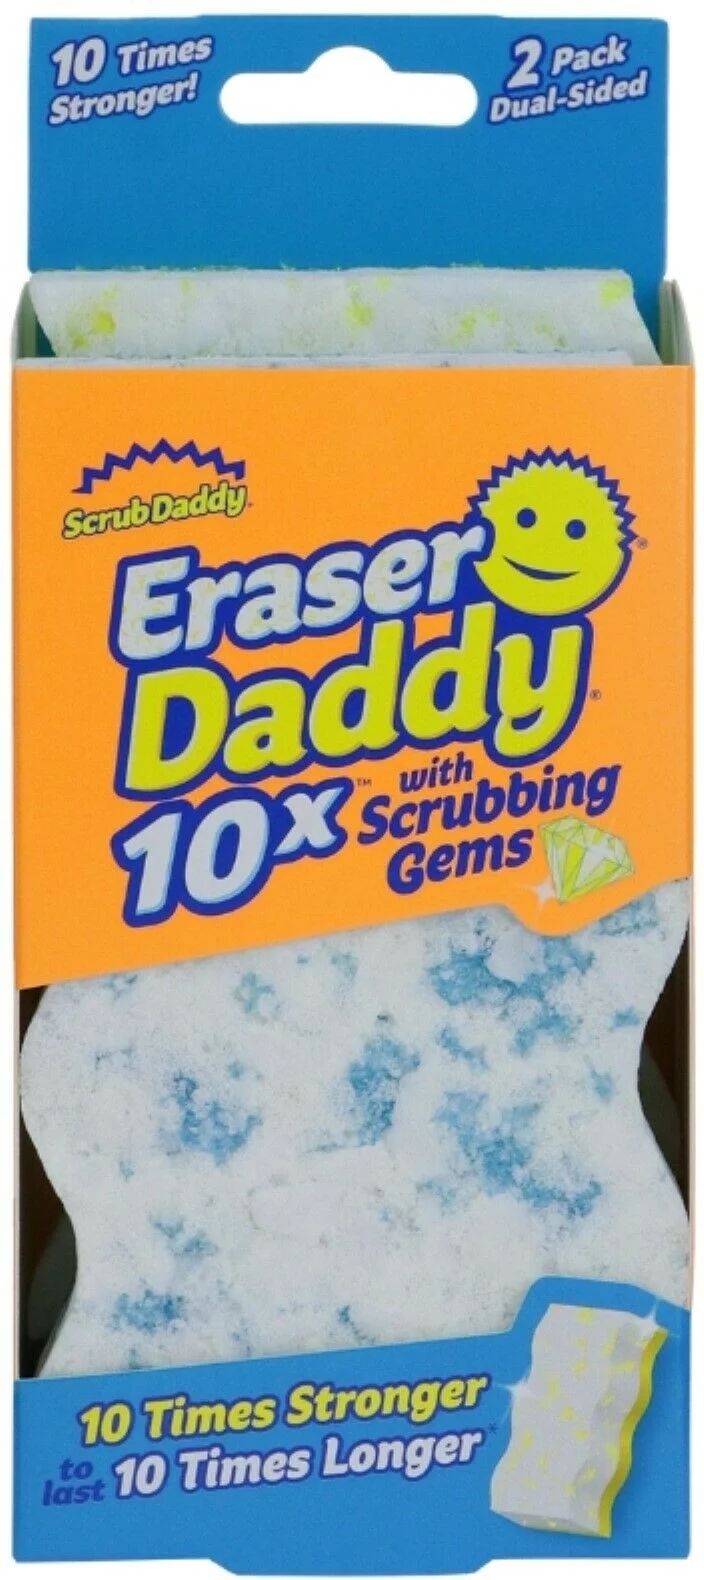 Scrub Daddy Eraser Sponge - 10x More Durable Than Traditional Erasers with Scrubbing Gems - Remov... | Walmart (US)